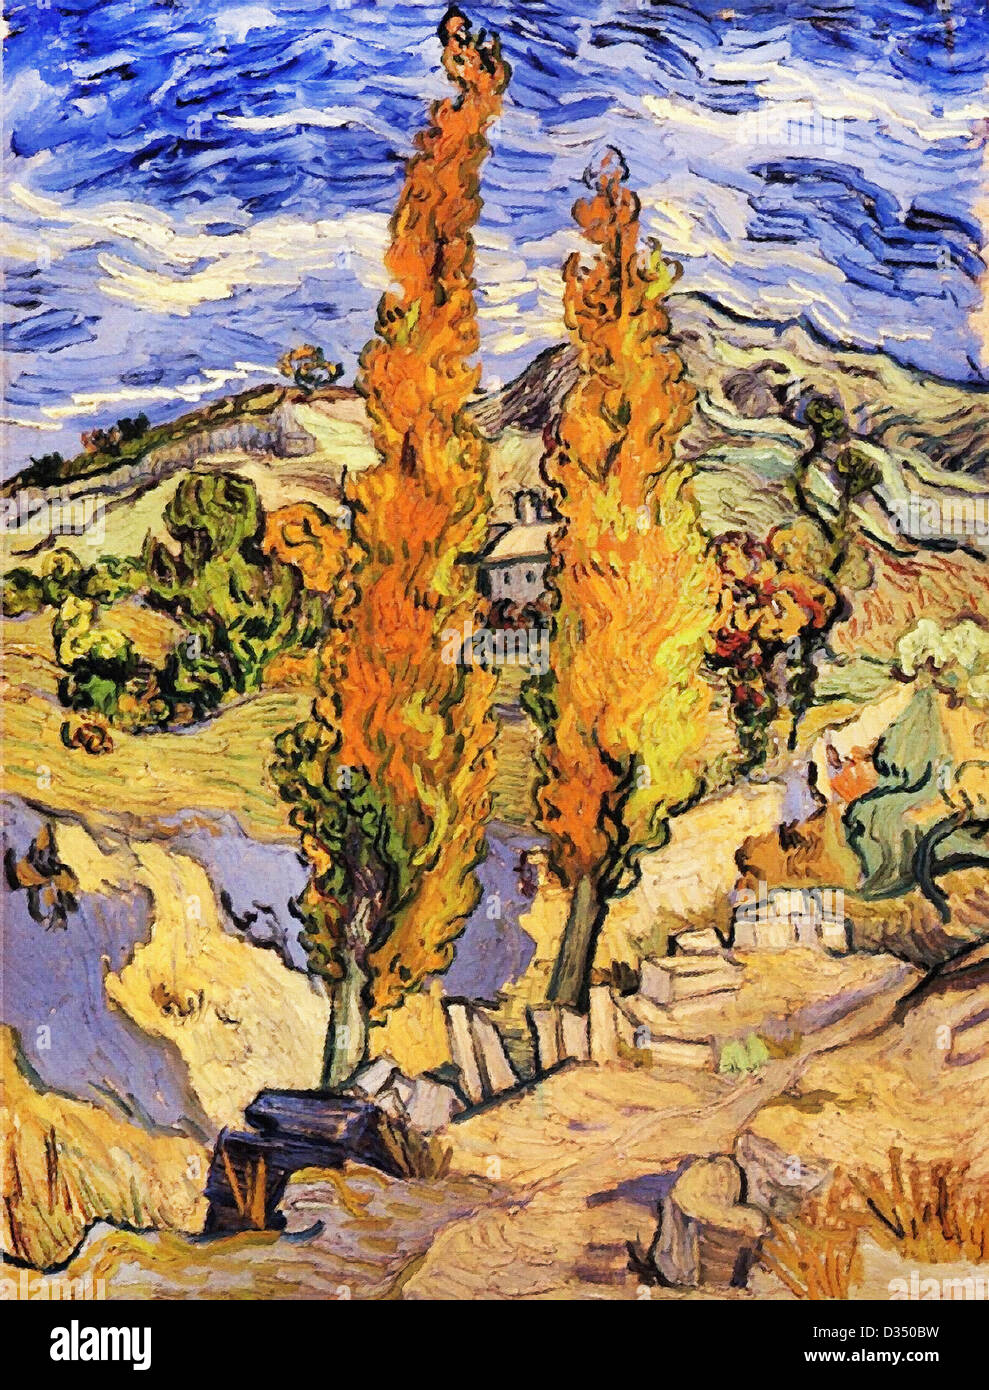 Vincent van Gogh, dos álamos sobre una colina. 1889. Posimpresionismo. Óleo sobre lienzo. Cleveland Museum of Art, Cleveland, OH, ESTADOS UNIDOS. Foto de stock